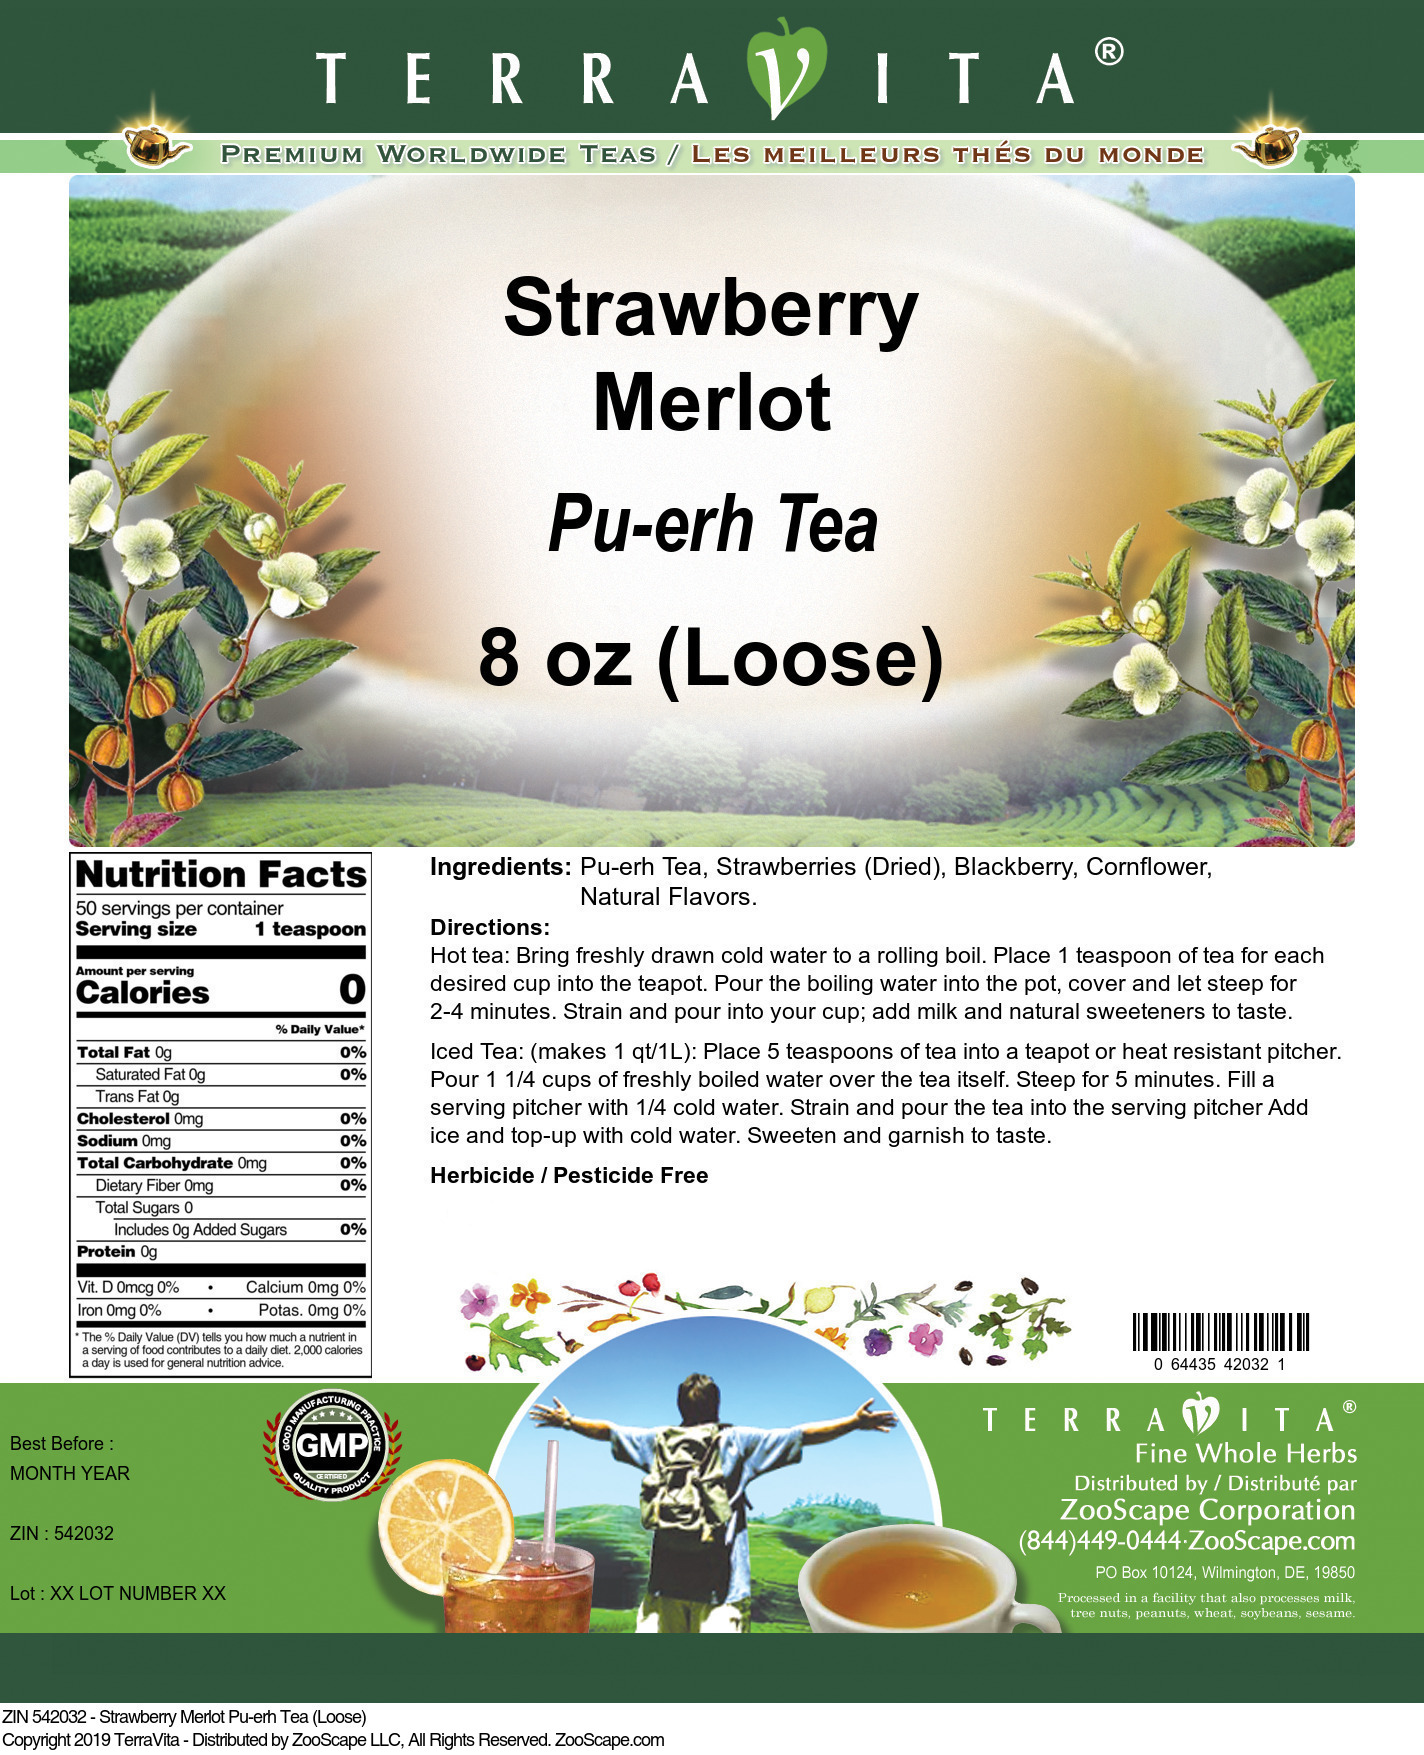 Strawberry Merlot Pu-erh Tea (Loose) - Label